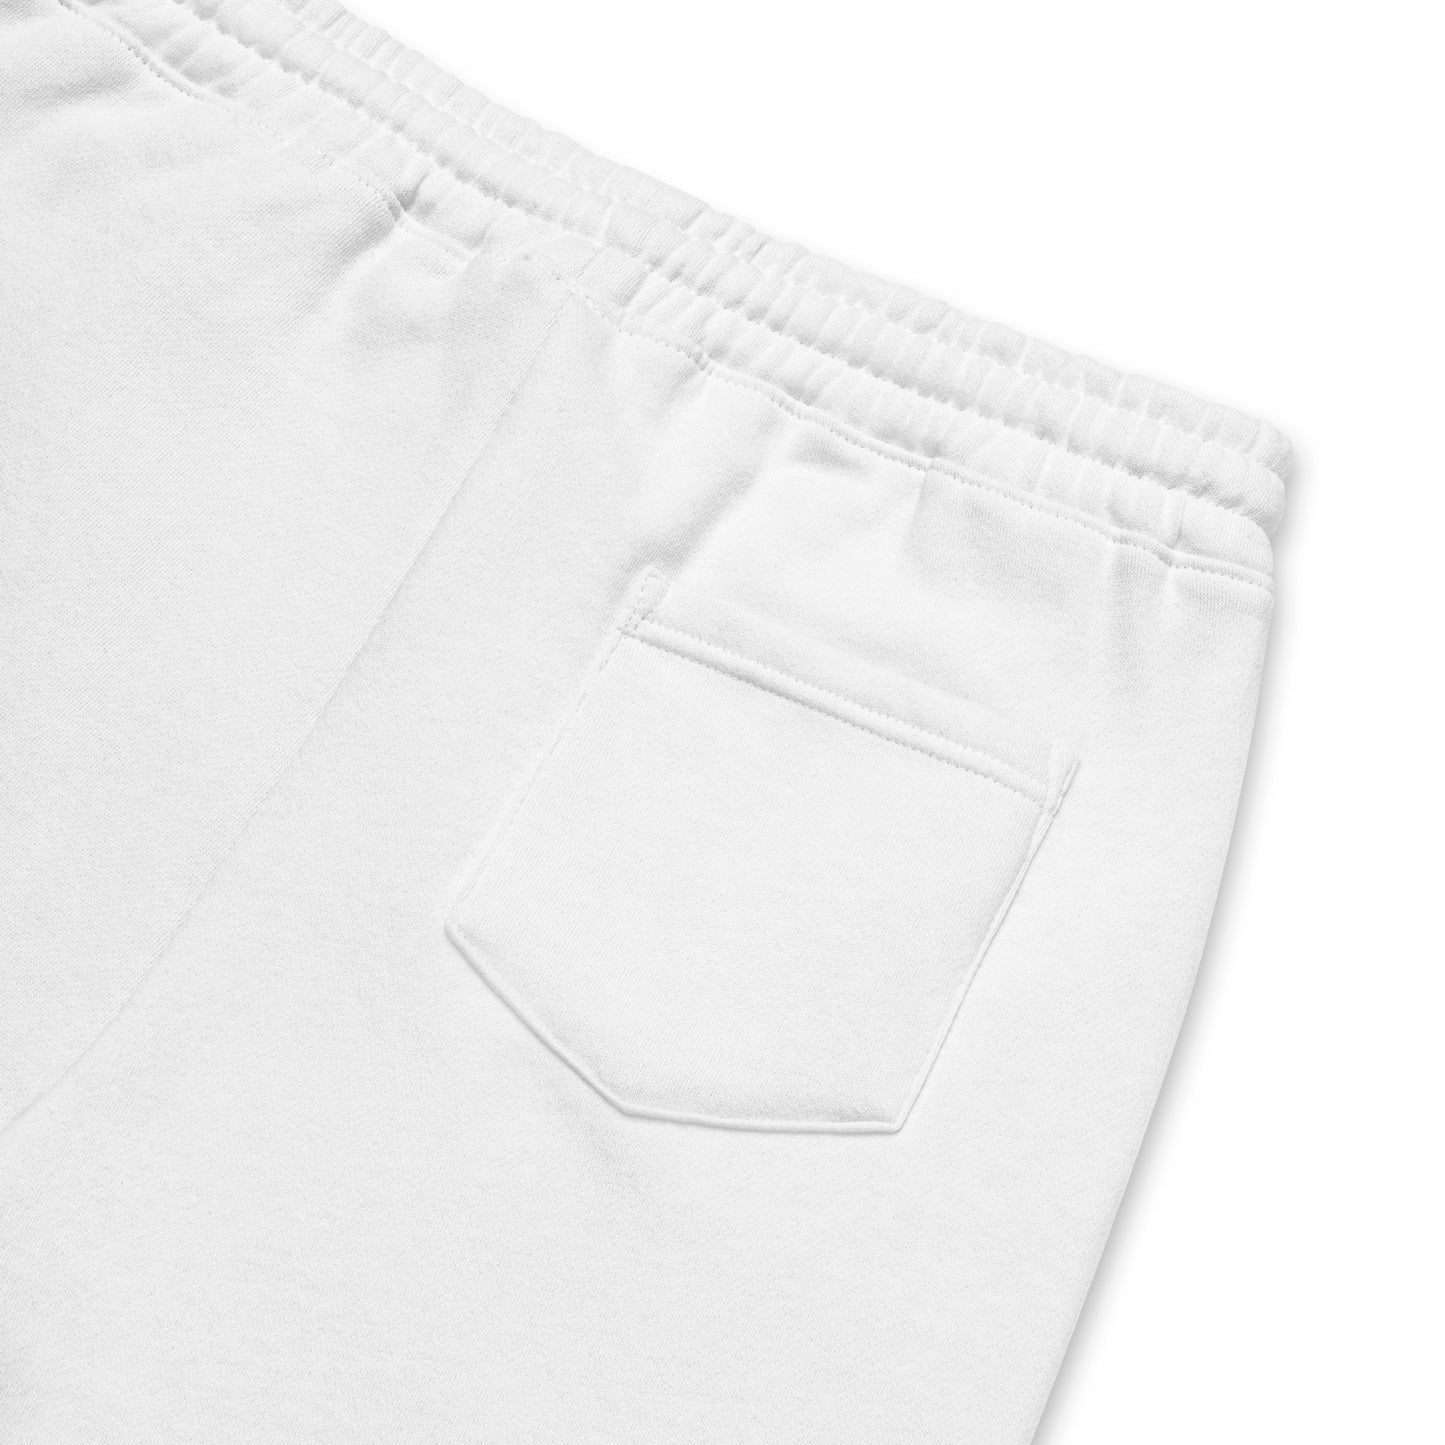 Fleece Shorts – Signature Series - Gym Shorts - Cultureopolis